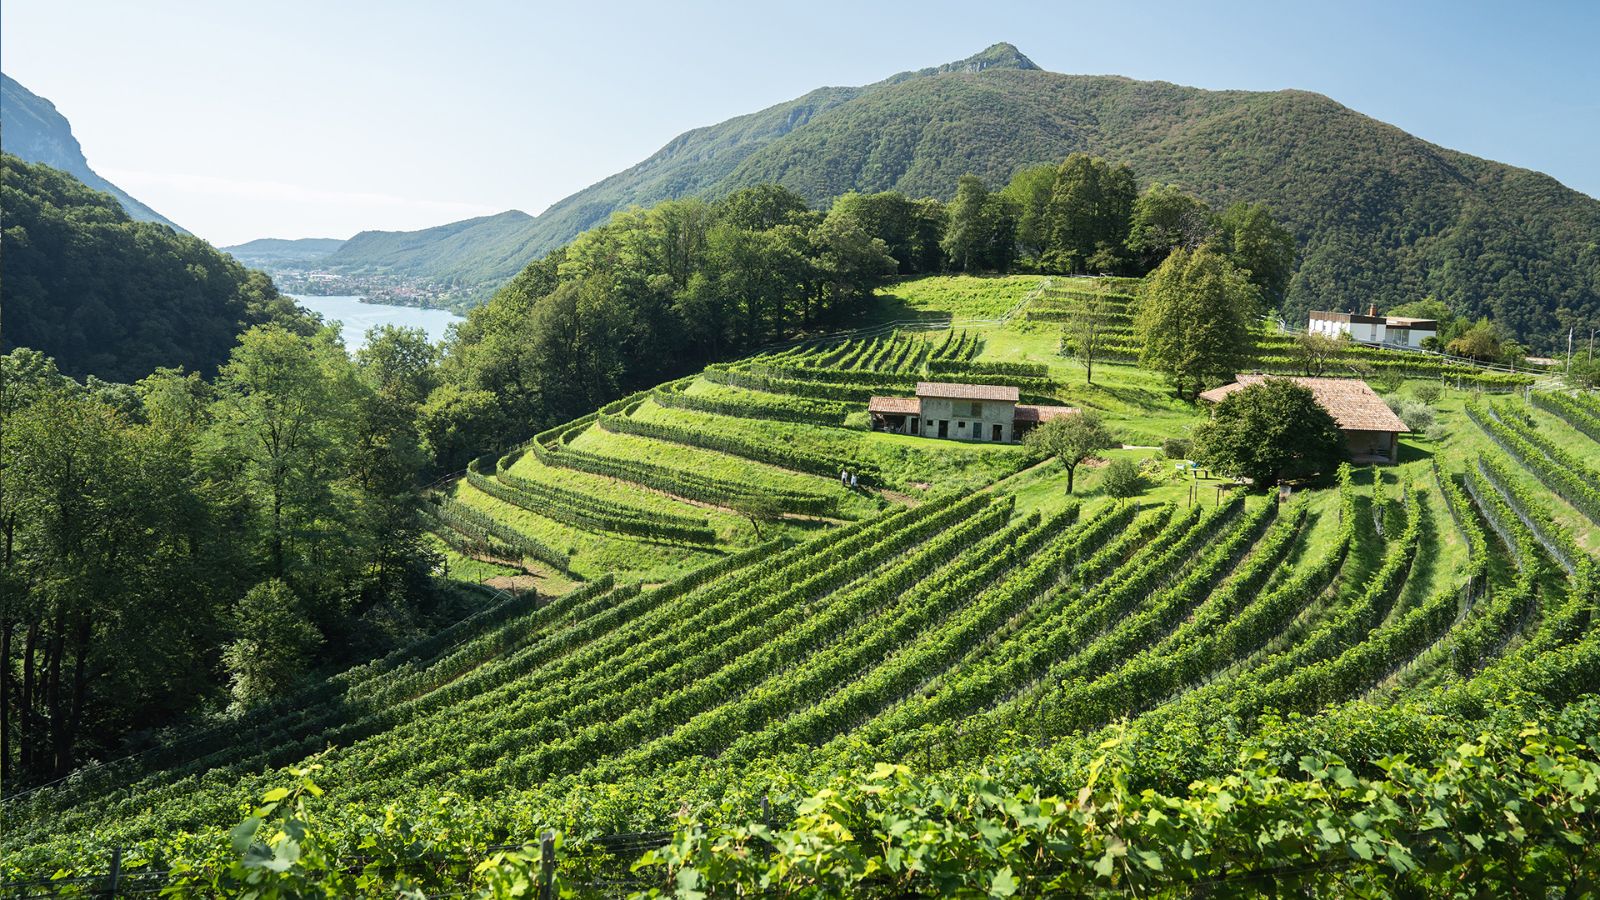 The vineyards of Arogno